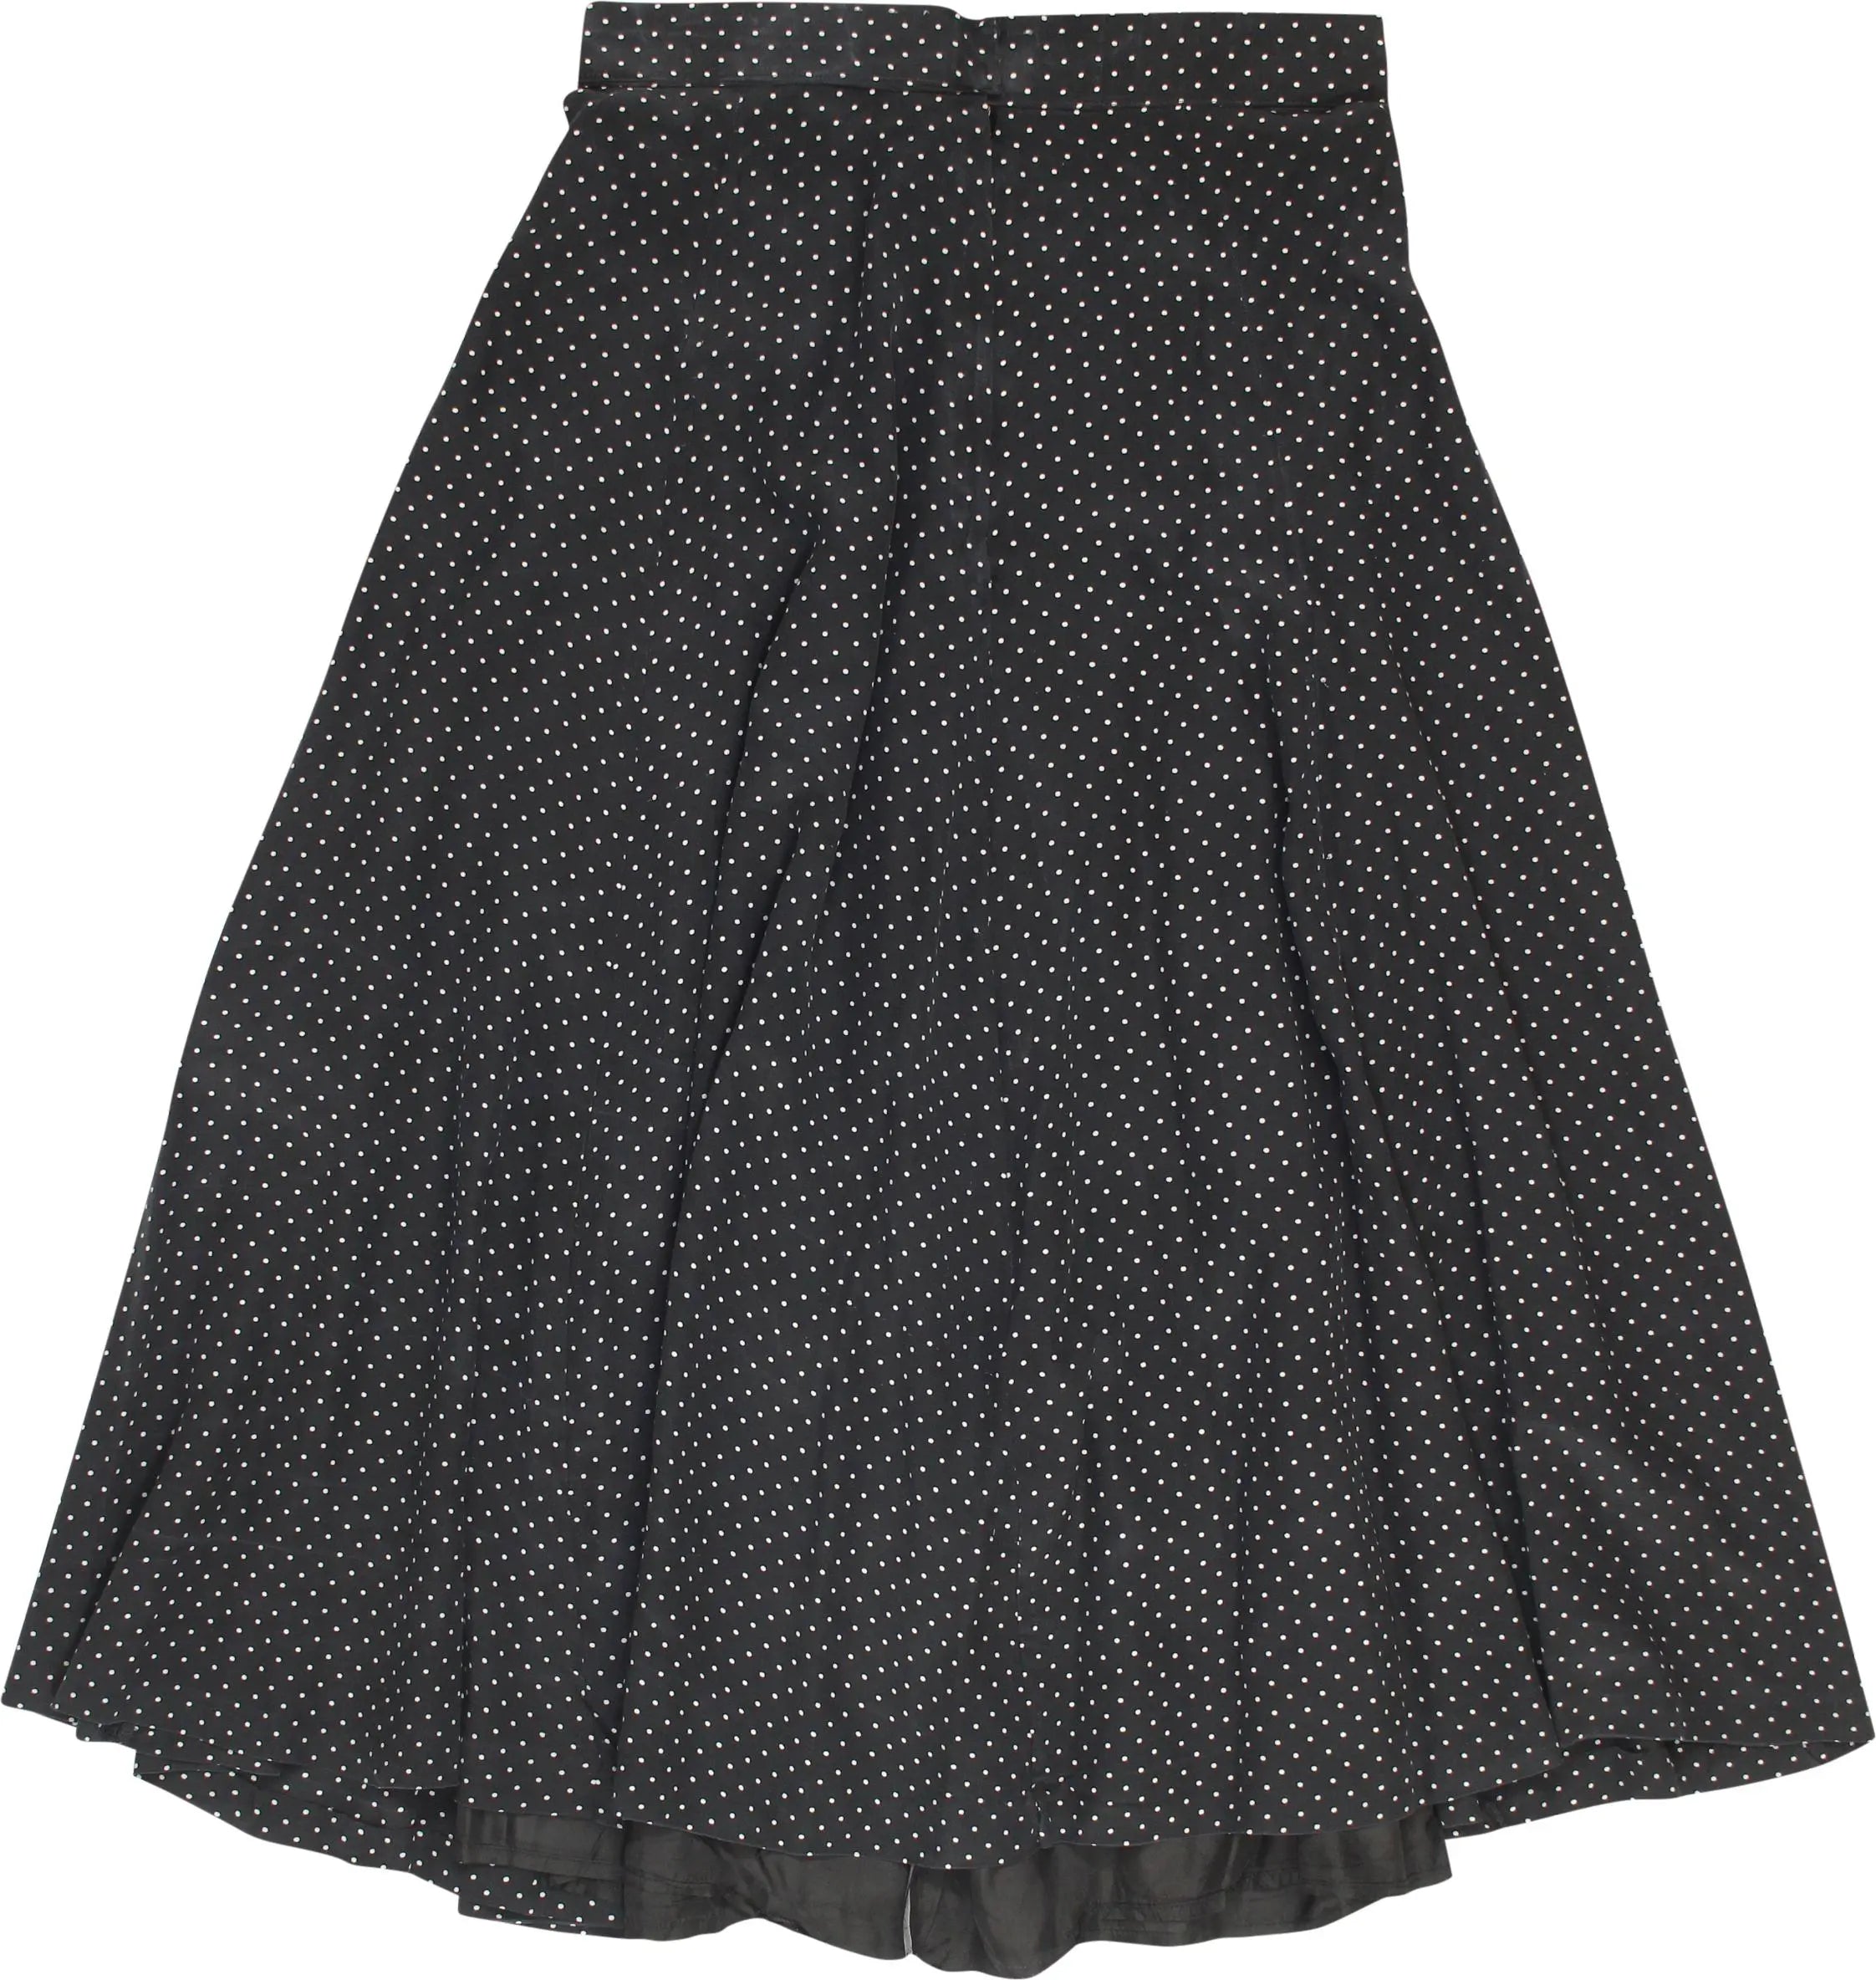 Handmade - Handmade Skirt with Polkadot Print- ThriftTale.com - Vintage and second handclothing